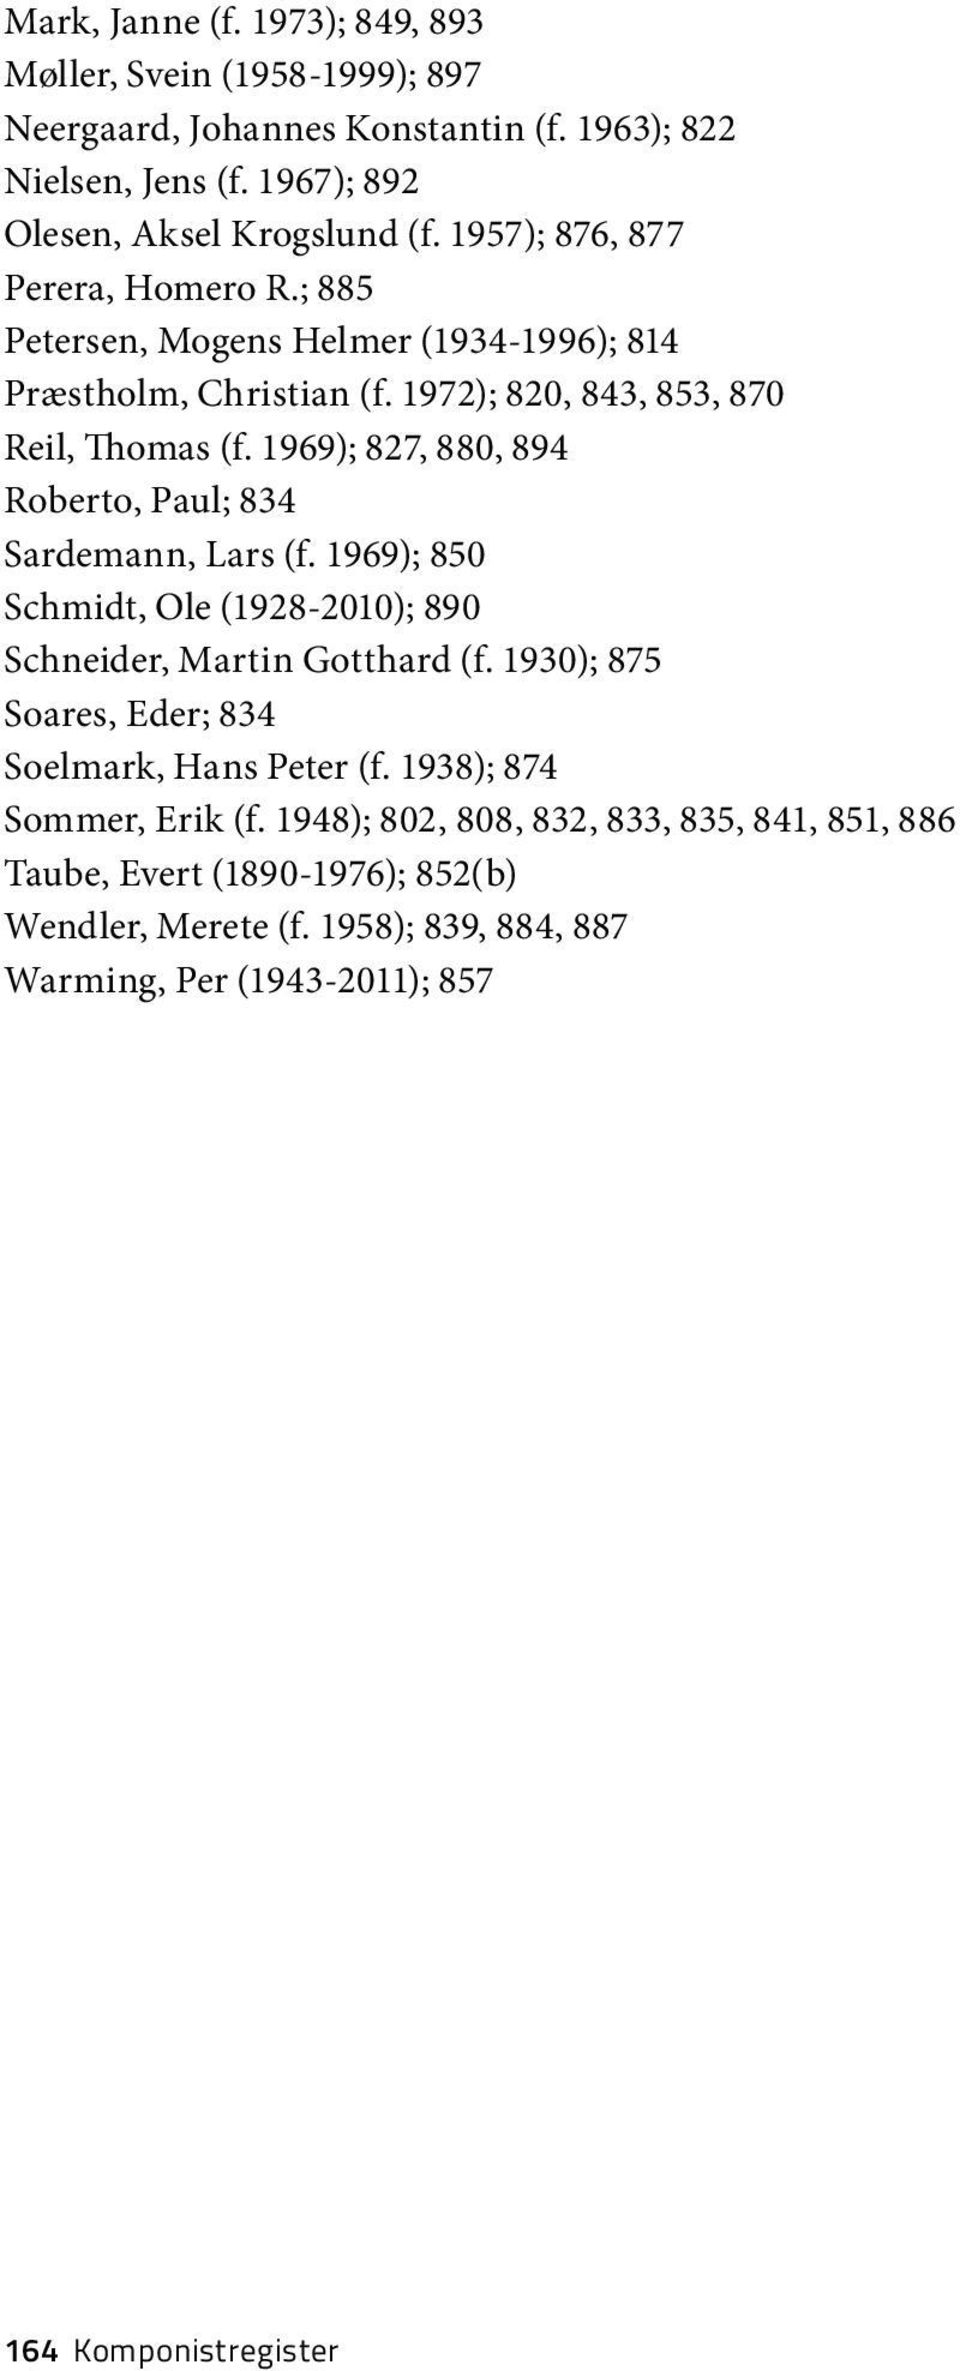 1969); 827, 880, 894 Roberto, Paul; 834 Sardemann, Lars (f. 1969); 850 Schmidt, Ole (1928-2010); 890 Schneider, Martin Gotthard (f.